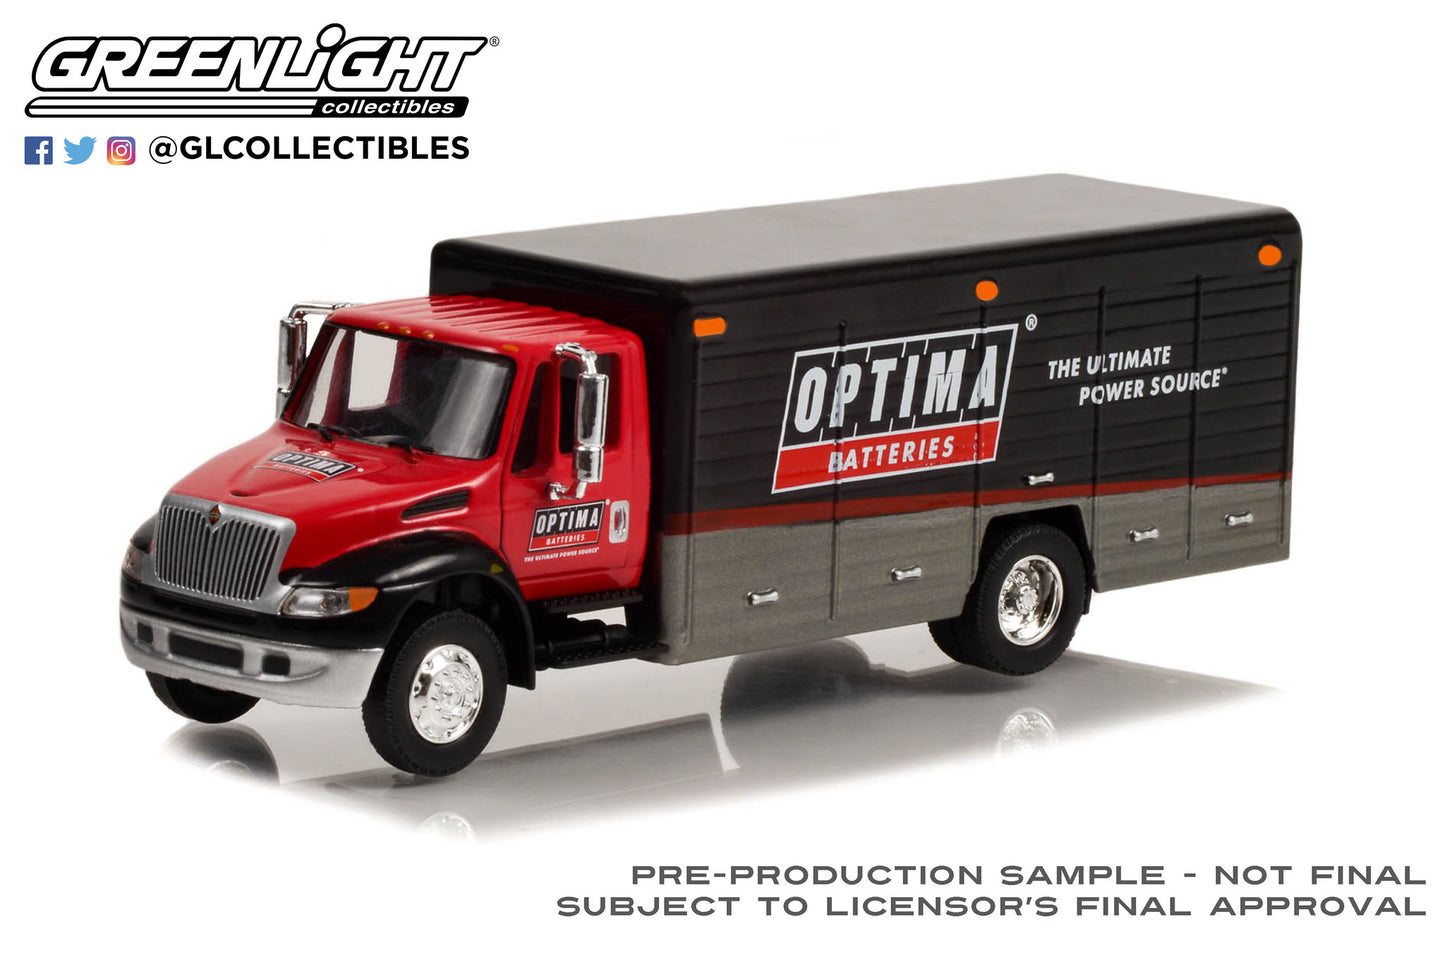 GreenLight 1:64 H.D. Trucks Series 24 - International Durastar 4400 Delivery Truck - OPTIMA Batteries 33240-C